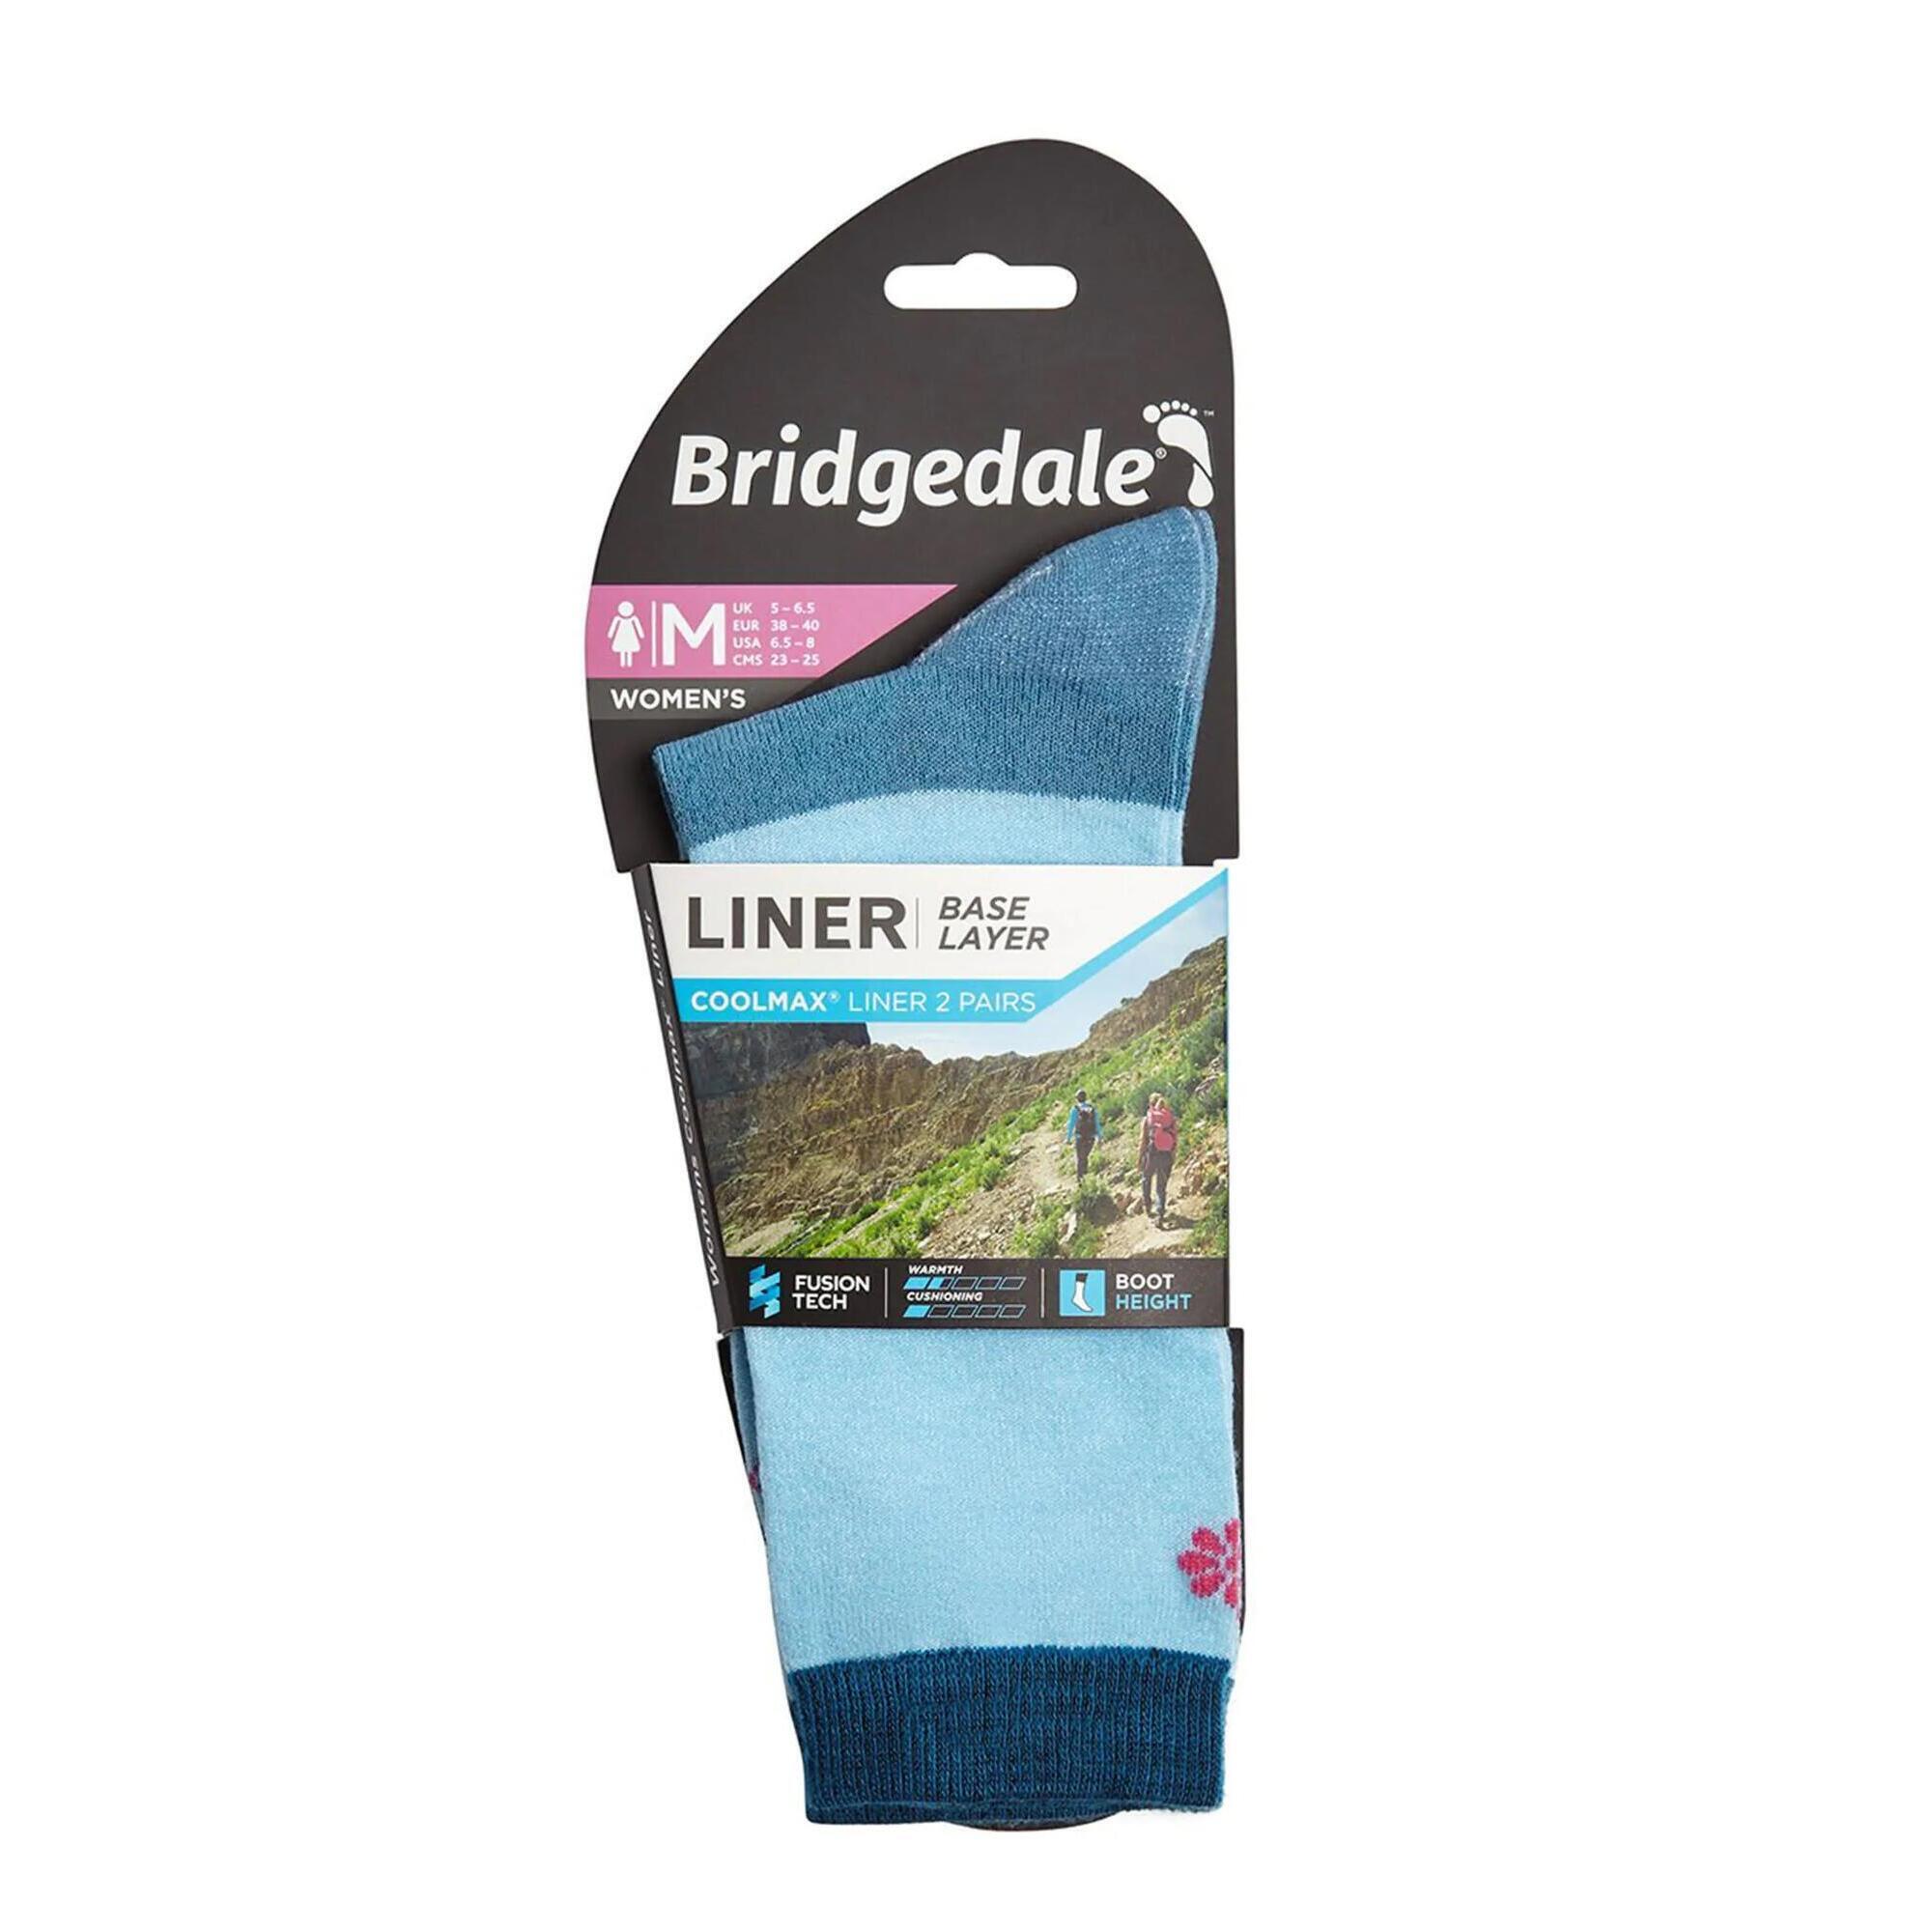 BRIDGEDALE LINER Base Layer Coolmax Liner Boot x 2 Women's - Sky blue